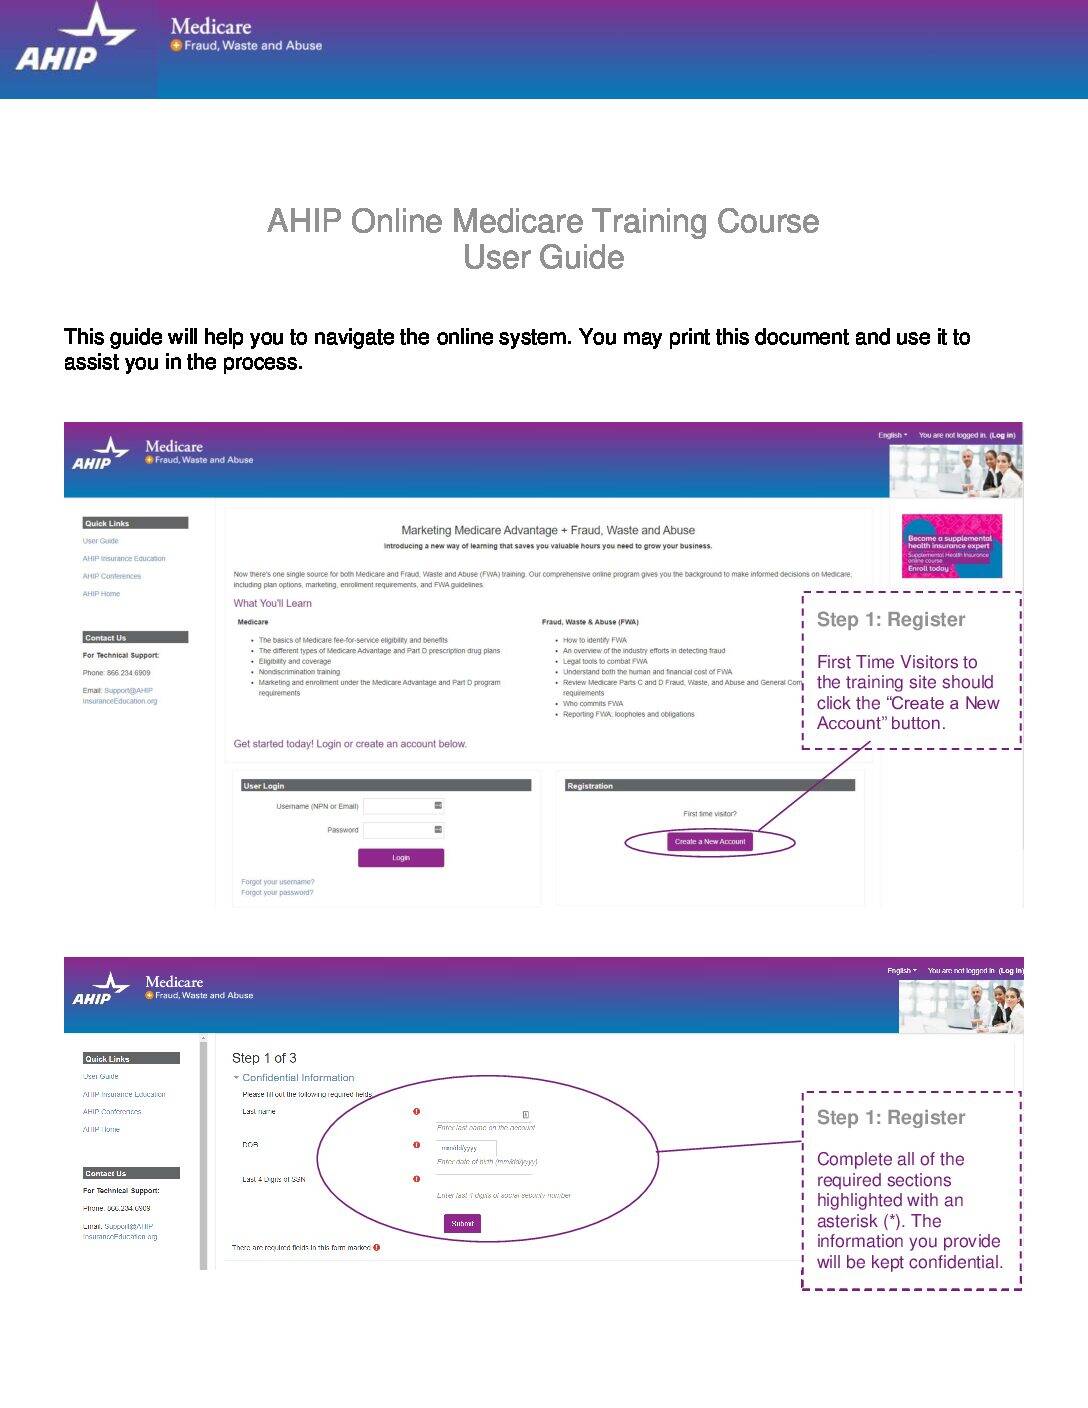 Online Courses - AHIP